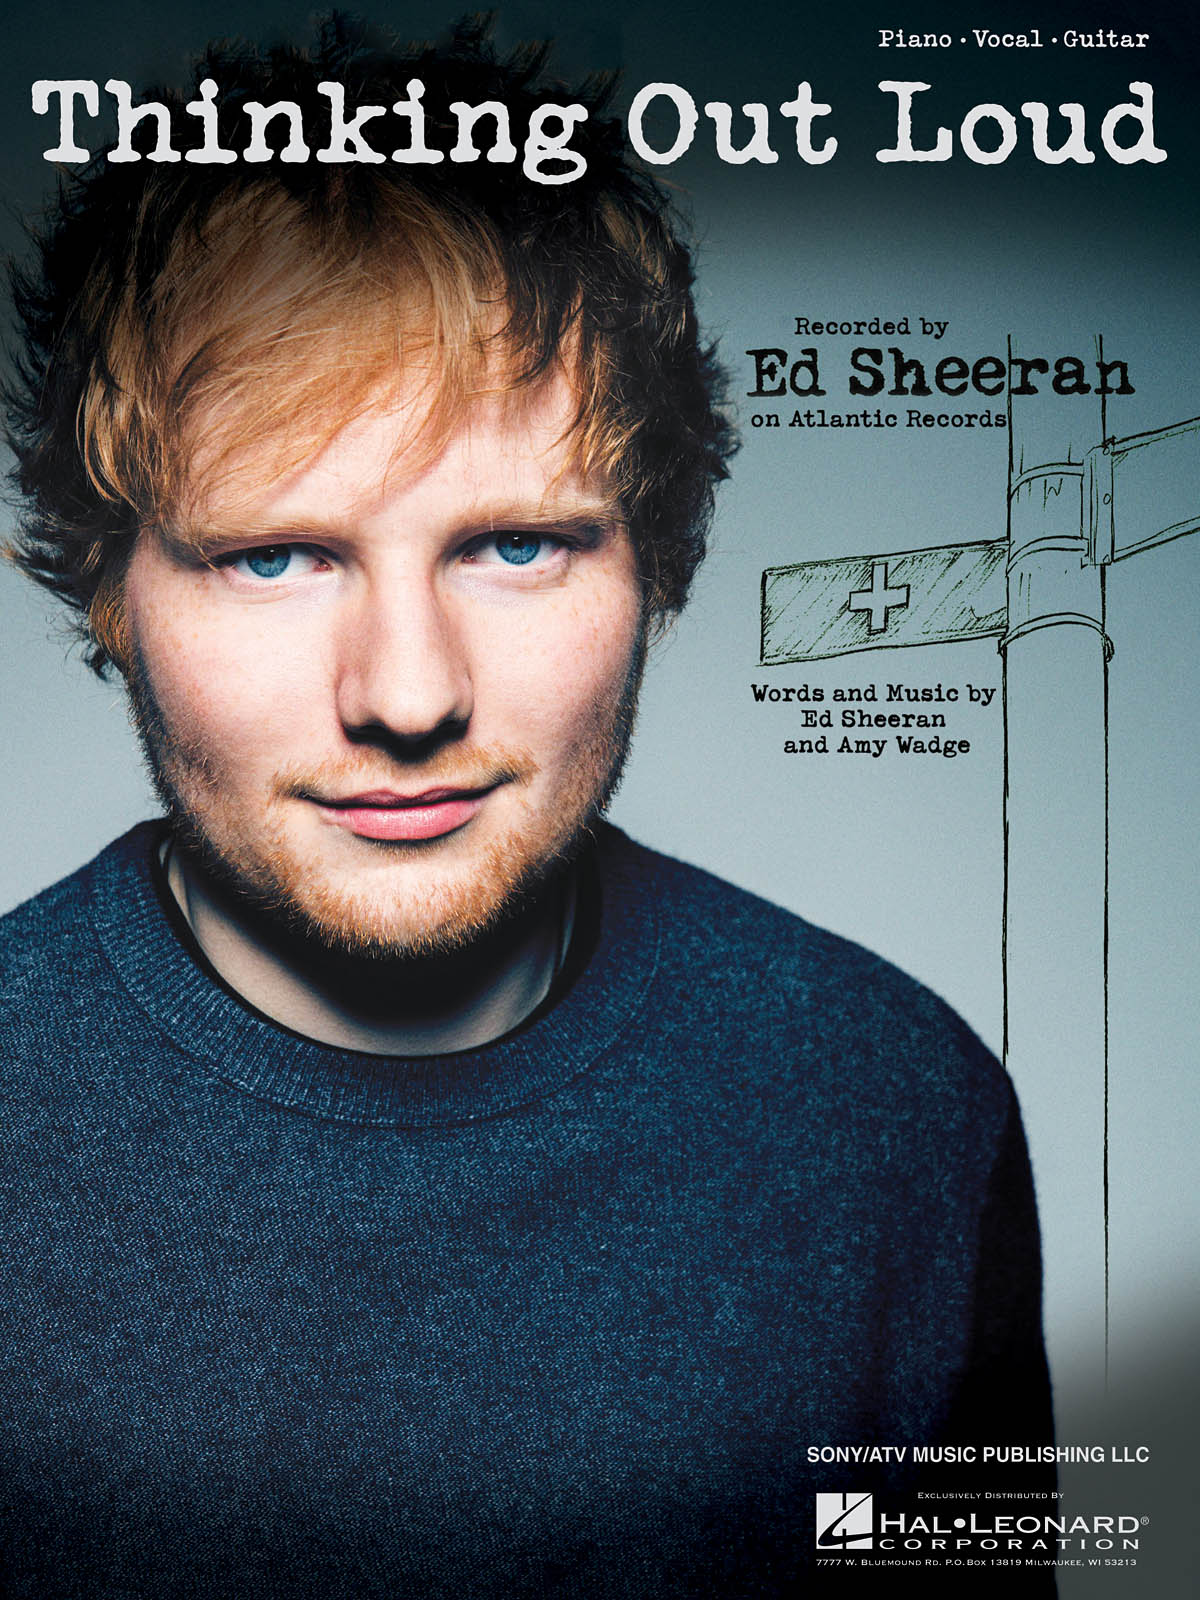 Ed Sheeran: Thinking Out Loud - Piano, Vocal, Guitar Single Sheet